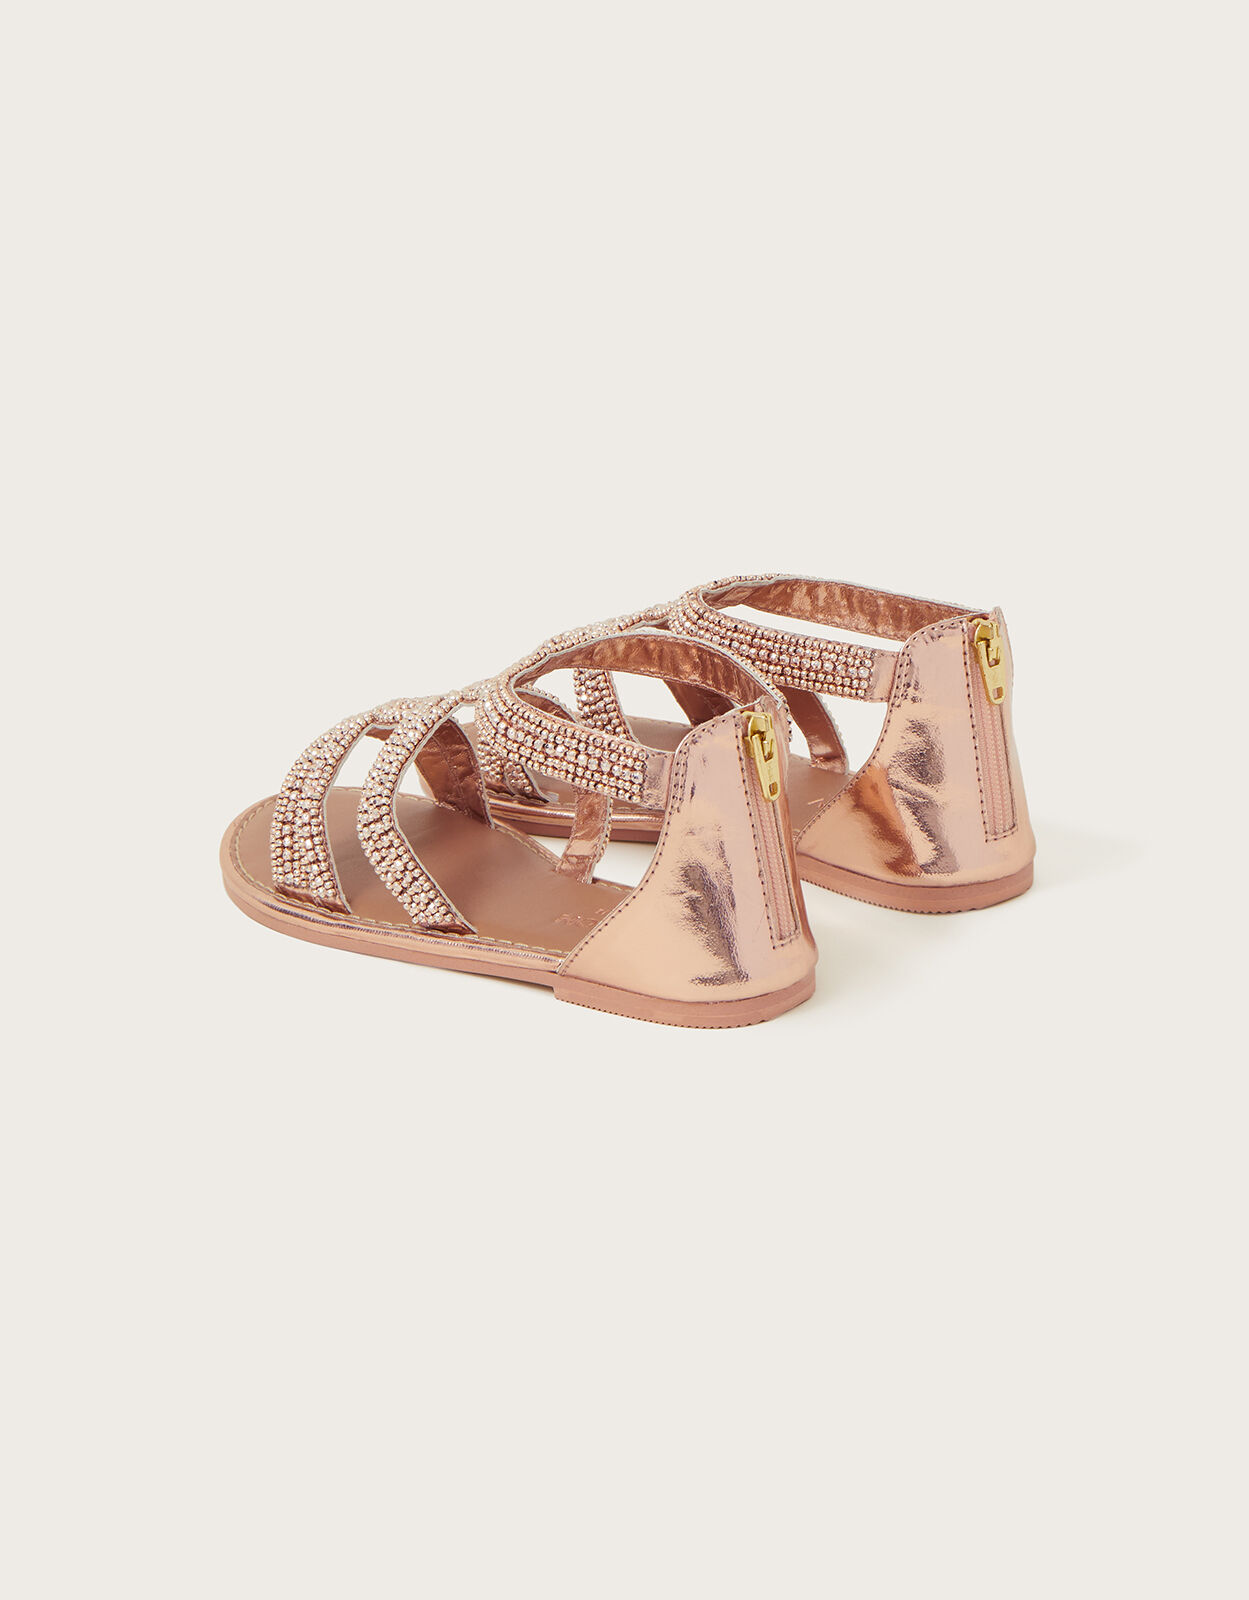 Glamorous Gold Sandals For Women, Metallic Snakeskin Embossed Sculptural  Heeled Ankle Strap Sandals | SHEIN USA